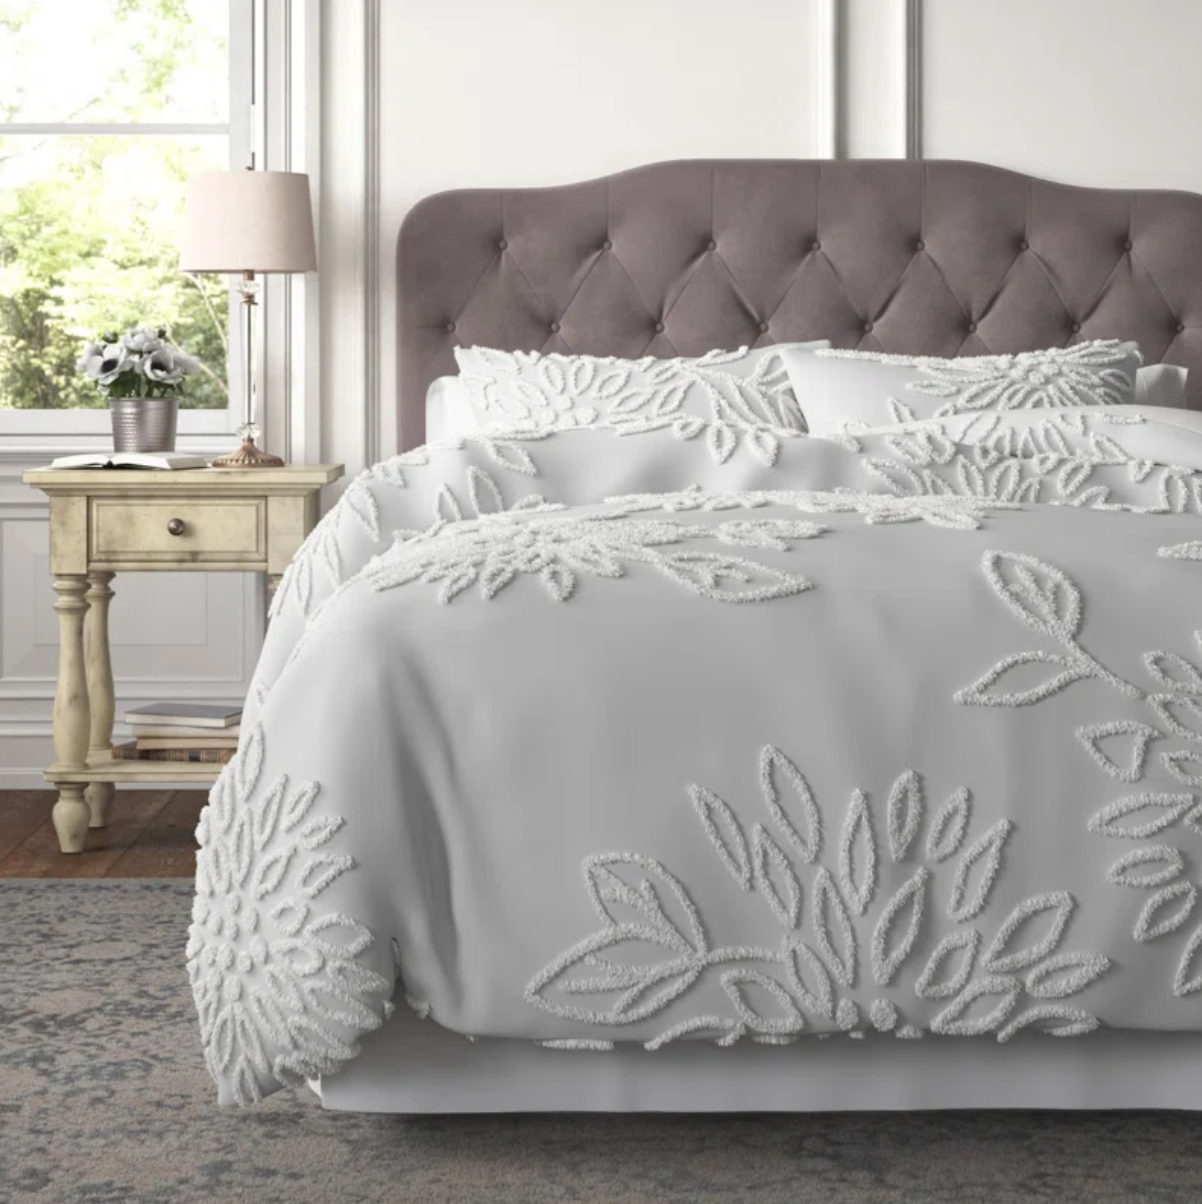 50 Pcs - Bellagio 400-Thread-Count Down Alternative Comforter - King - New  - Retail Ready